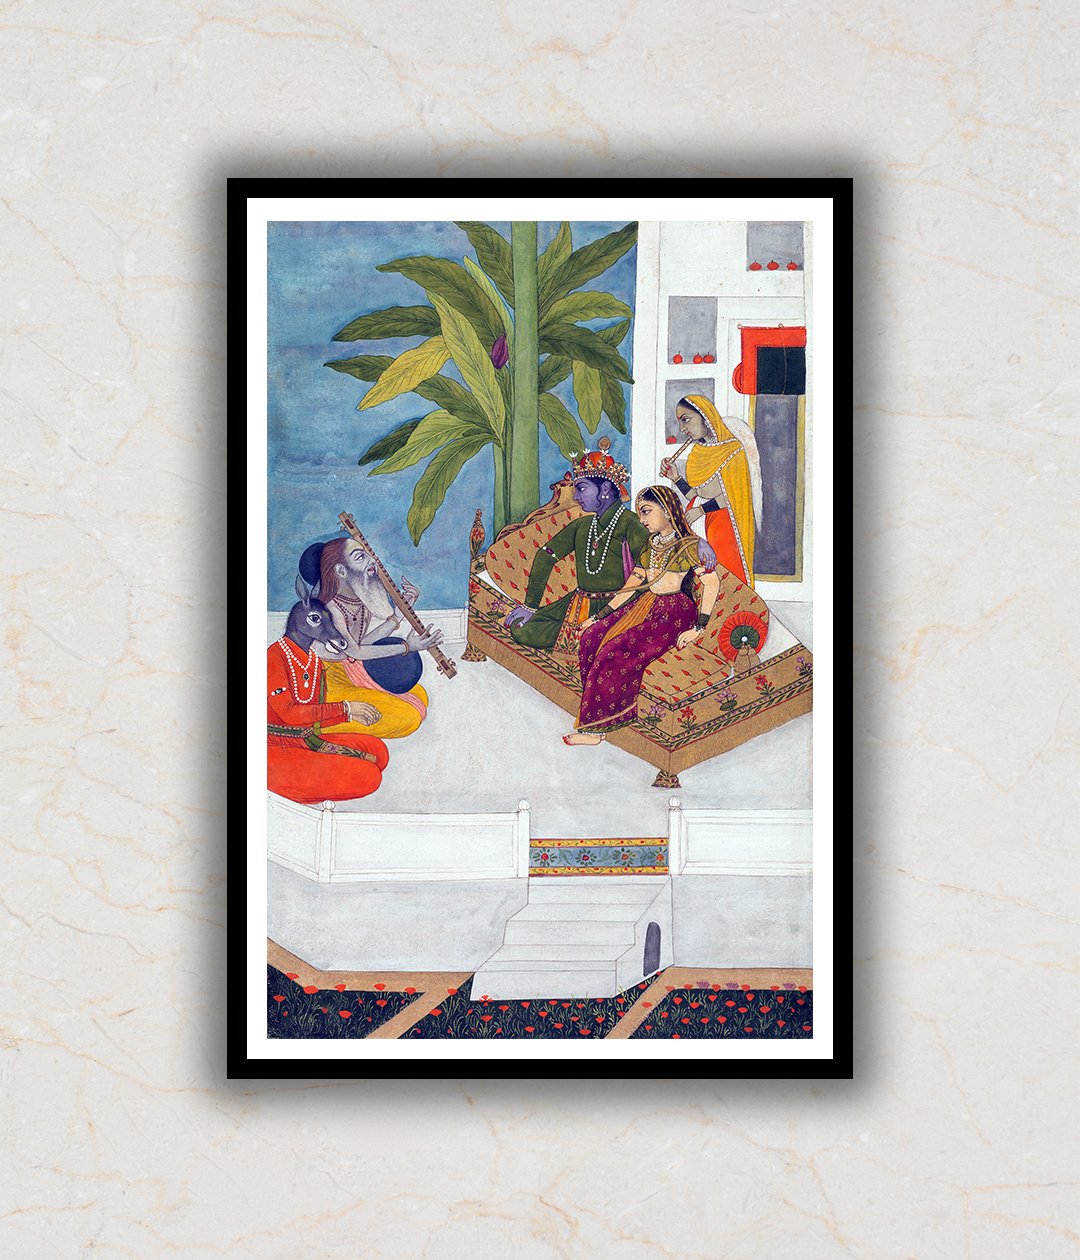 Serenading Radha Krishna Art Painting For Home Wall Art Decor